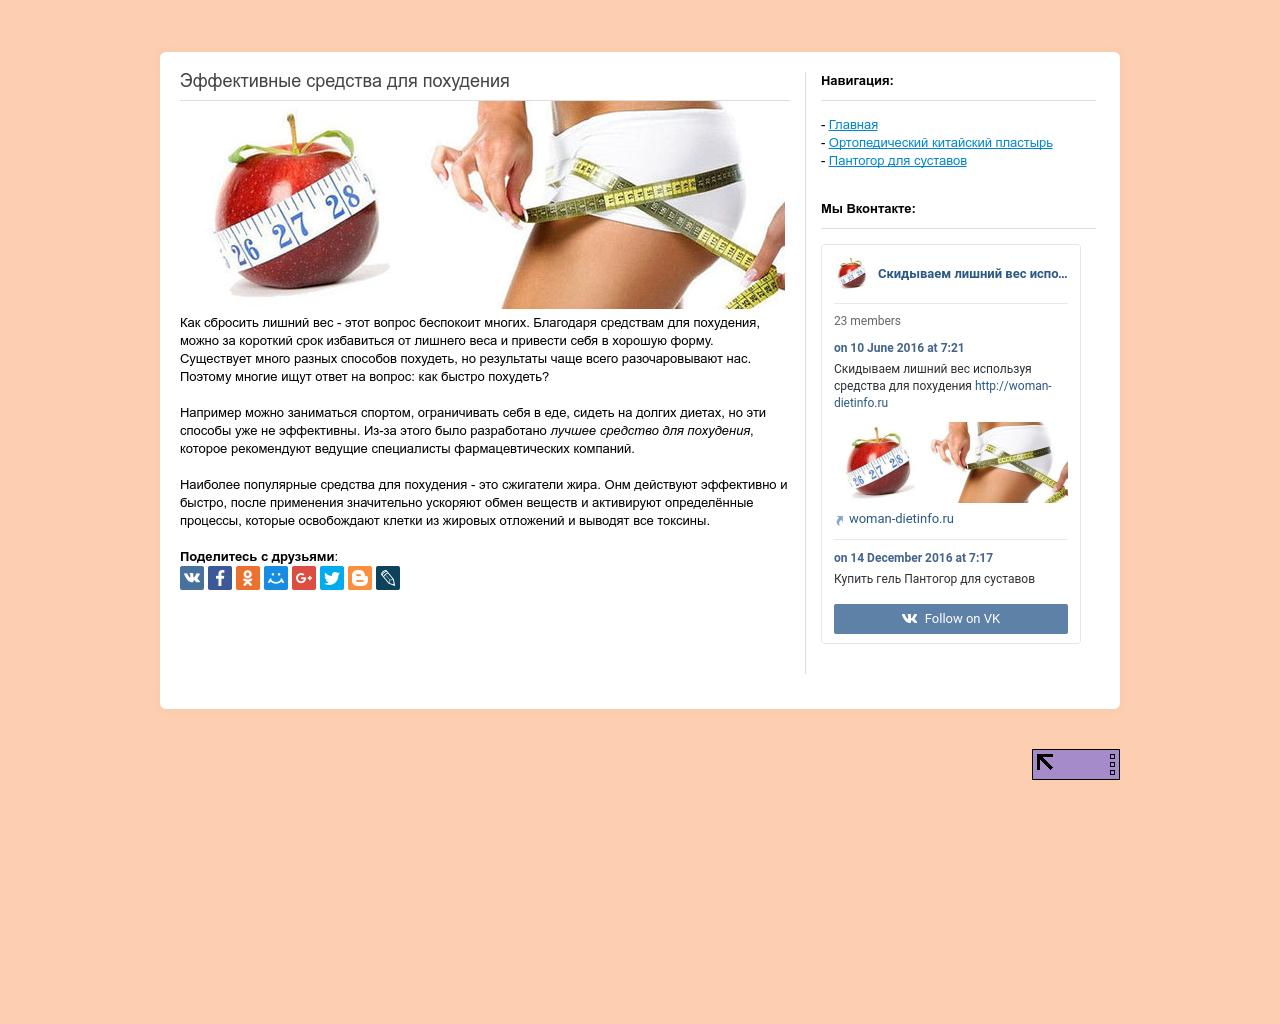 Изображение сайта woman-dietinfo.ru в разрешении 1280x1024